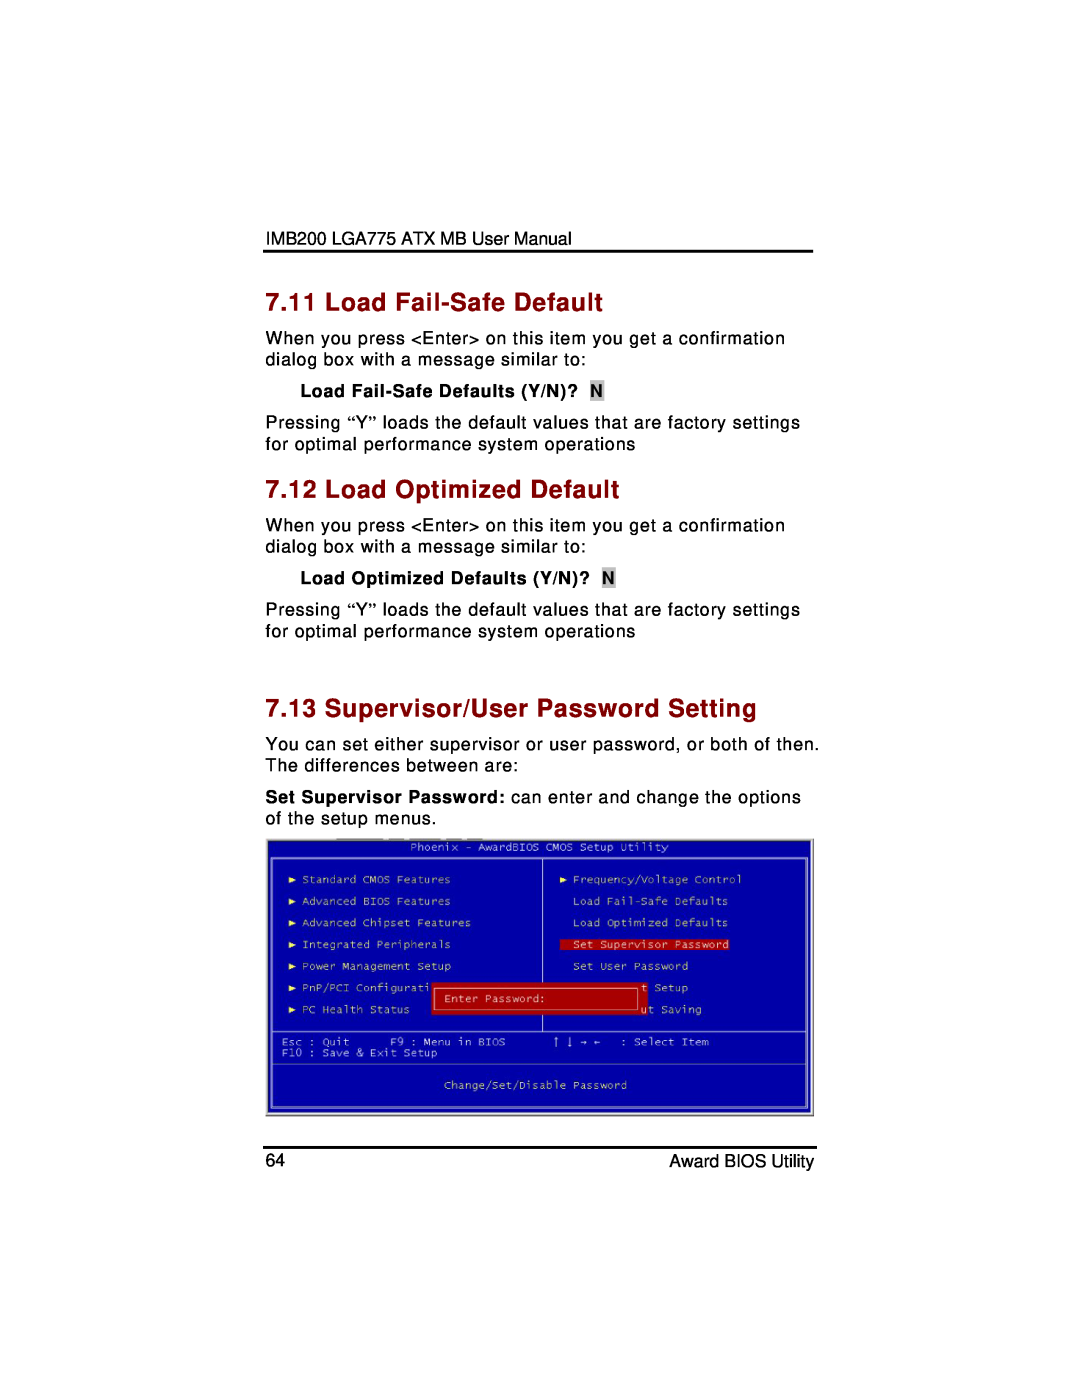 Intel IMB200VGE user manual Load Fail-Safe Default, Load Optimized Default, Supervisor/User Password Setting 